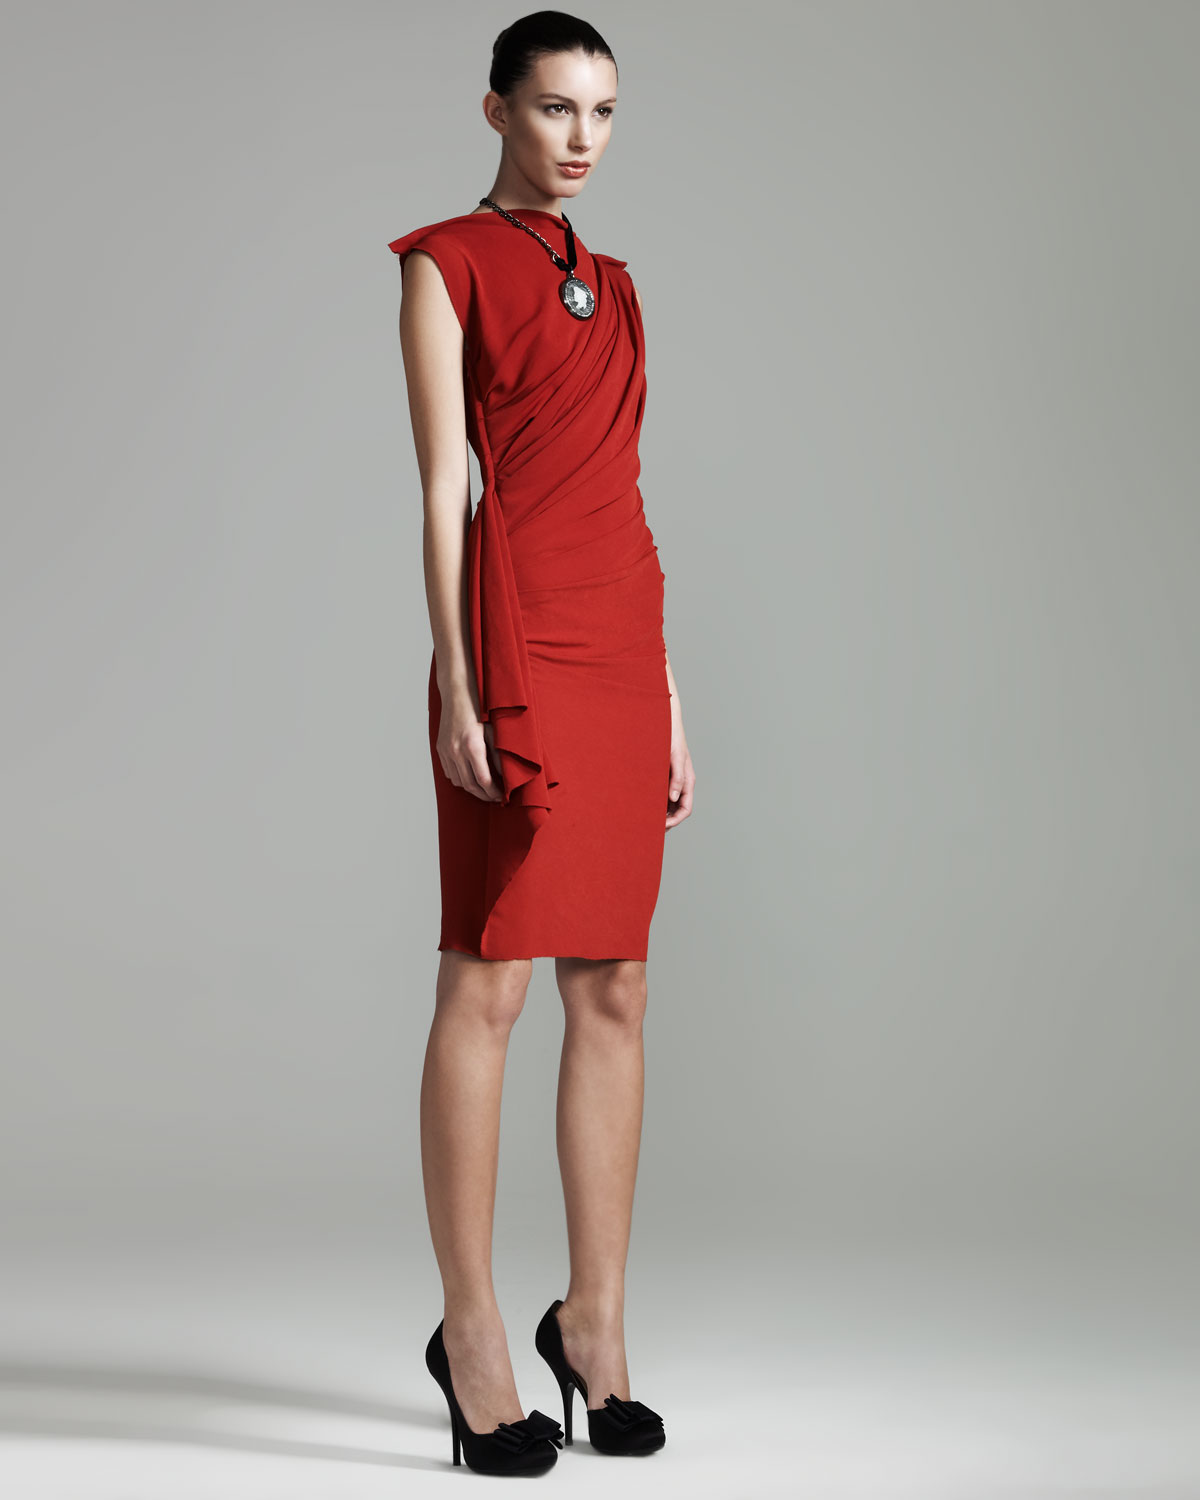 lanvin red dress